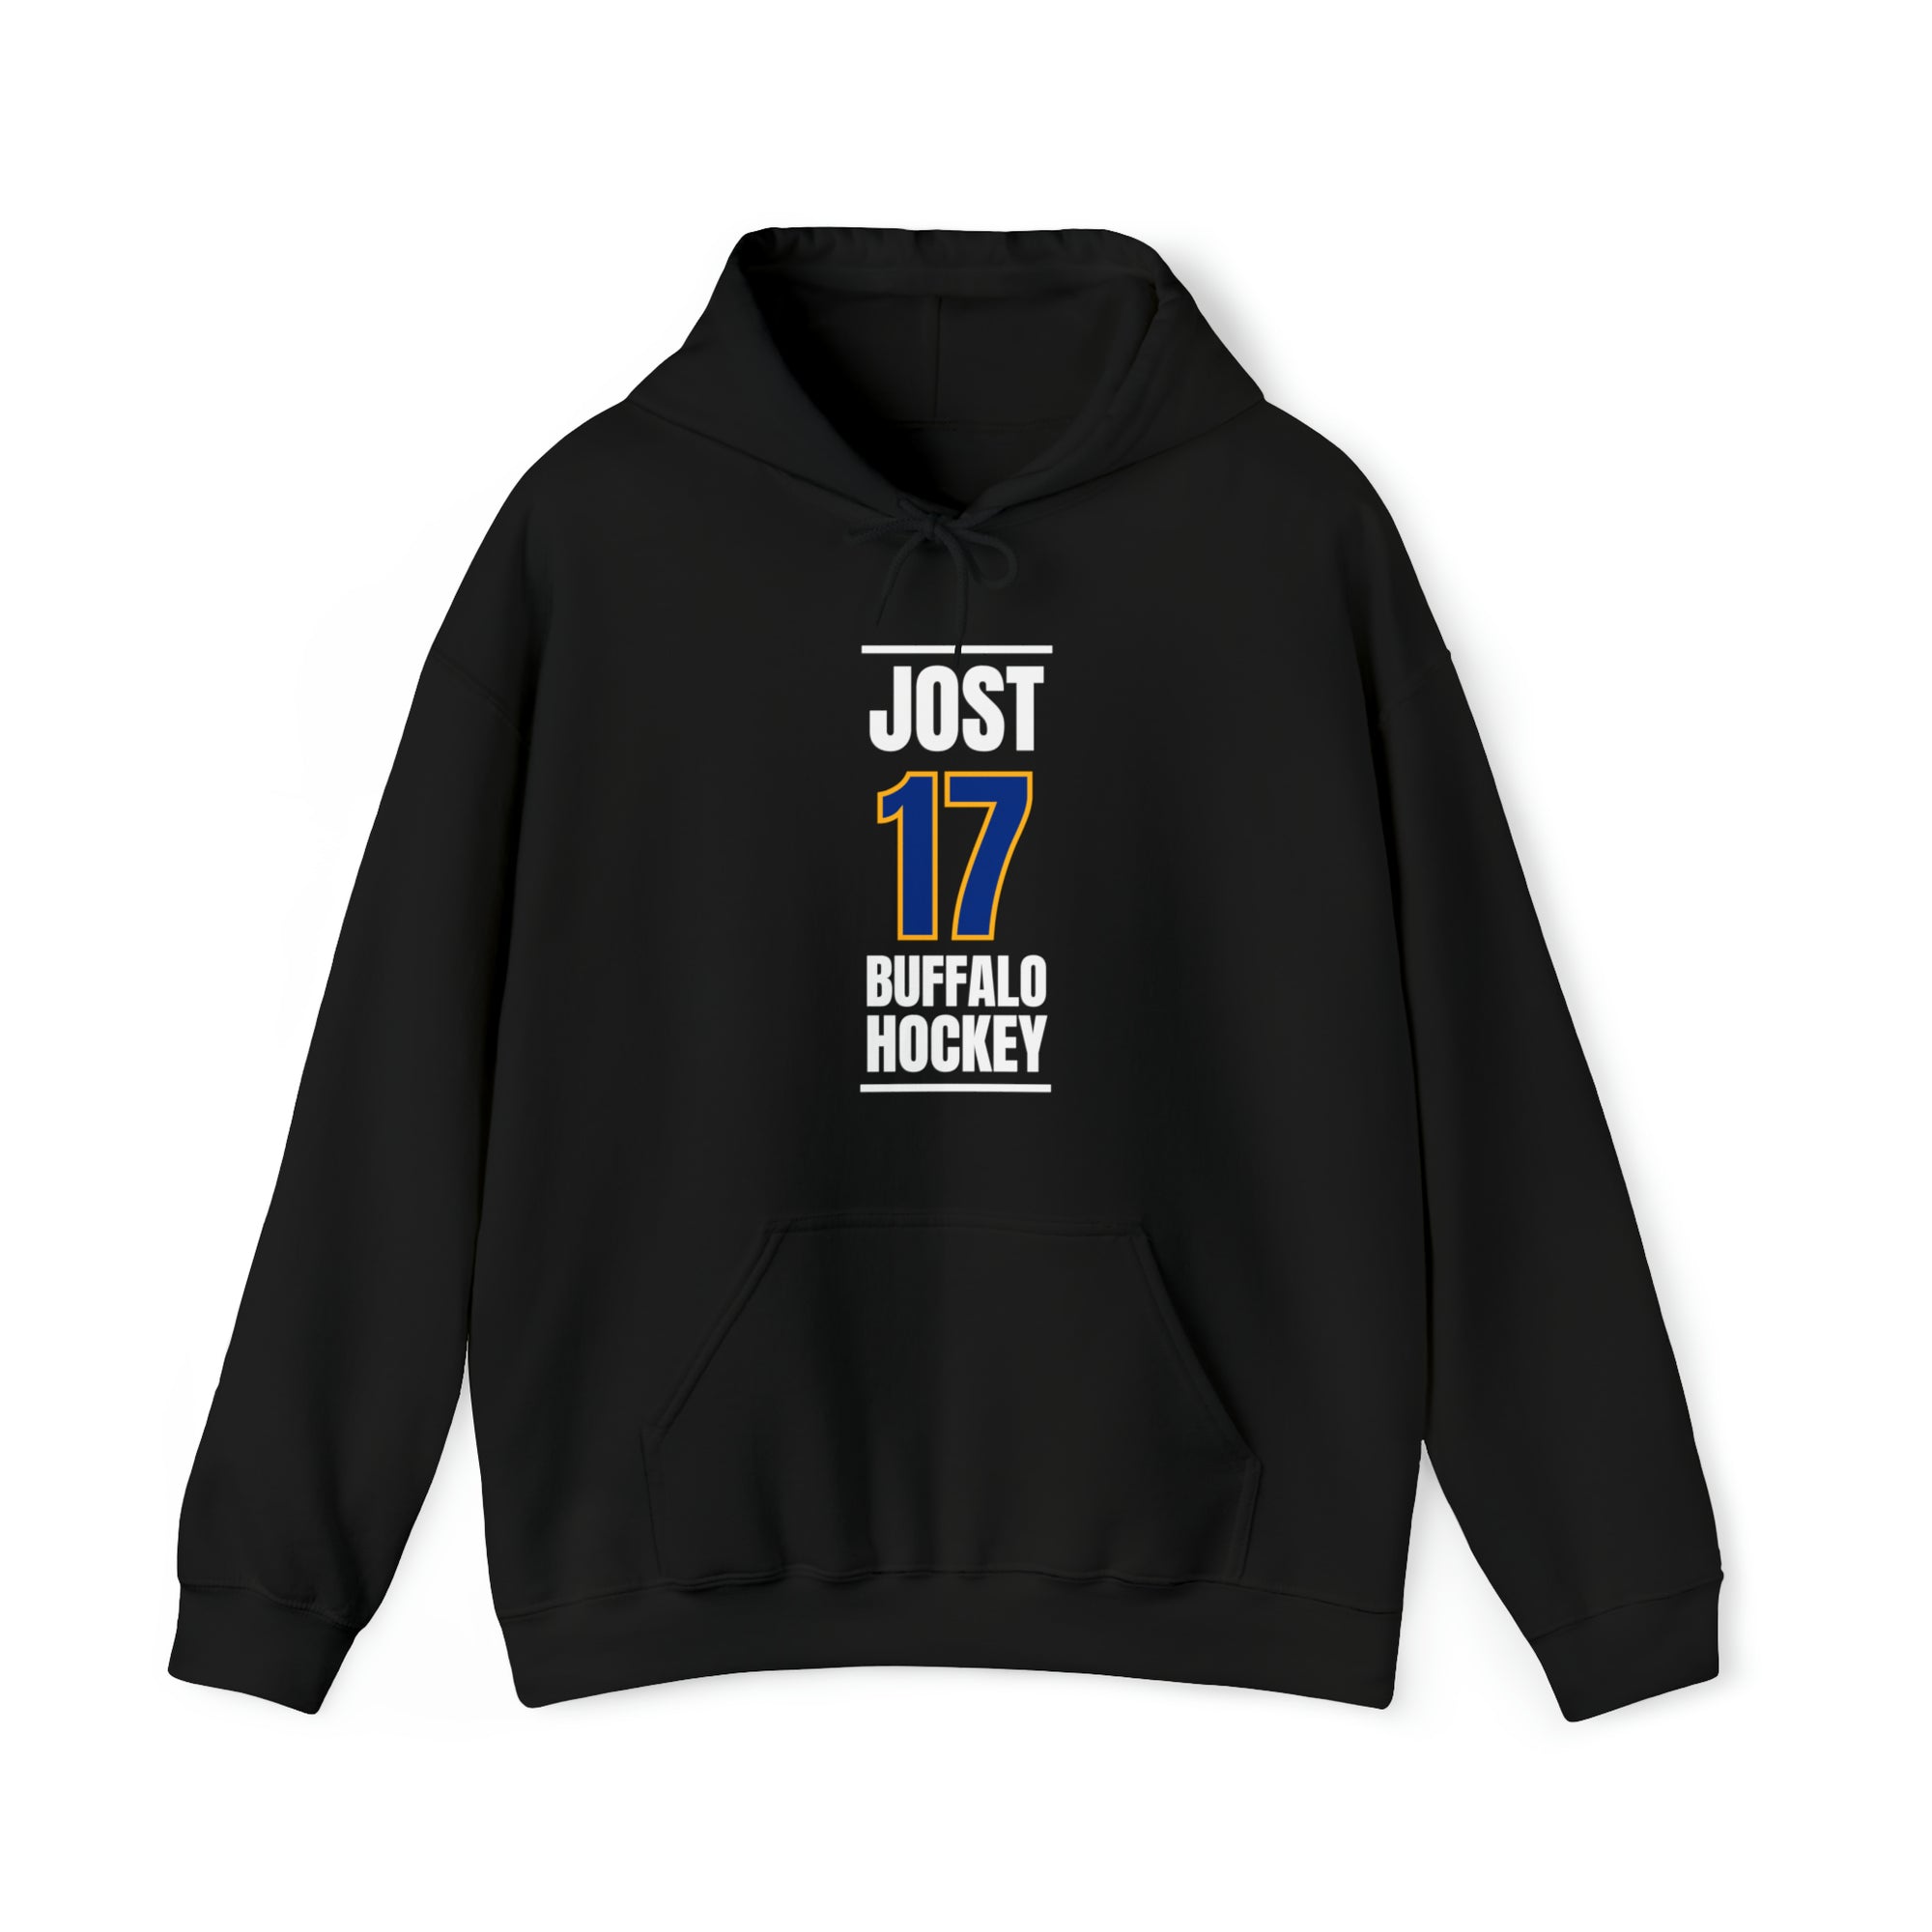 Jost 17 Buffalo Hockey Royal Blue Vertical Design Unisex Hooded Sweatshirt